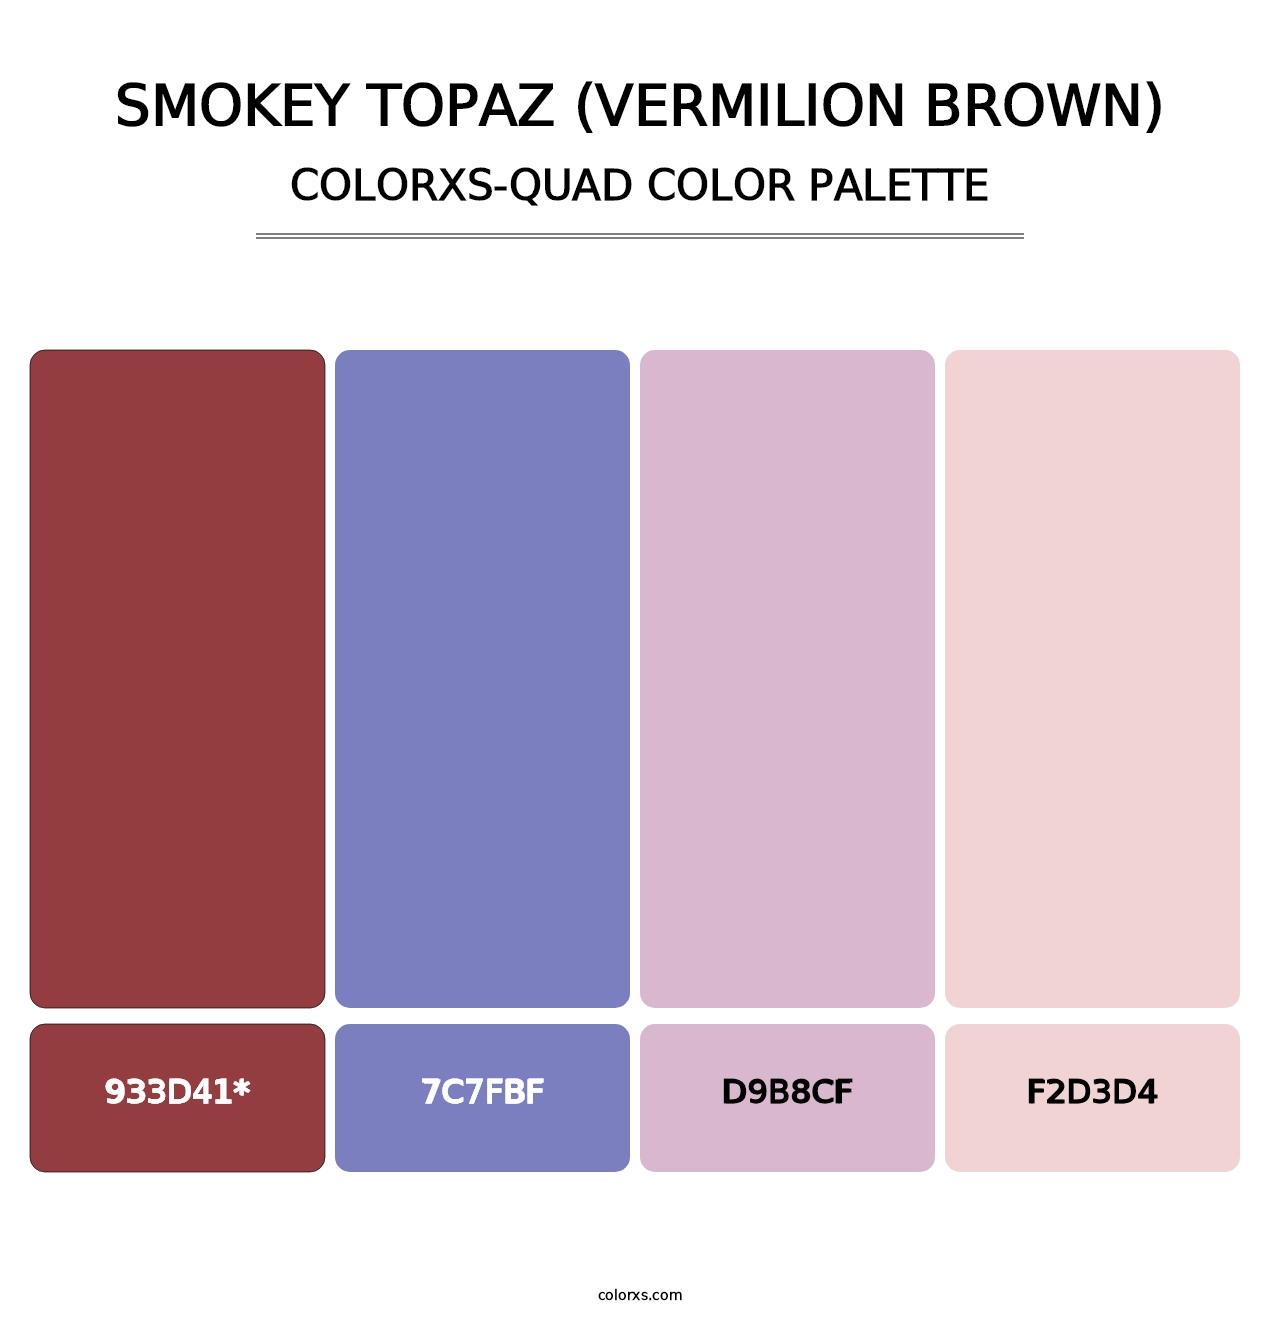 Smokey Topaz (Vermilion Brown) - Colorxs Quad Palette